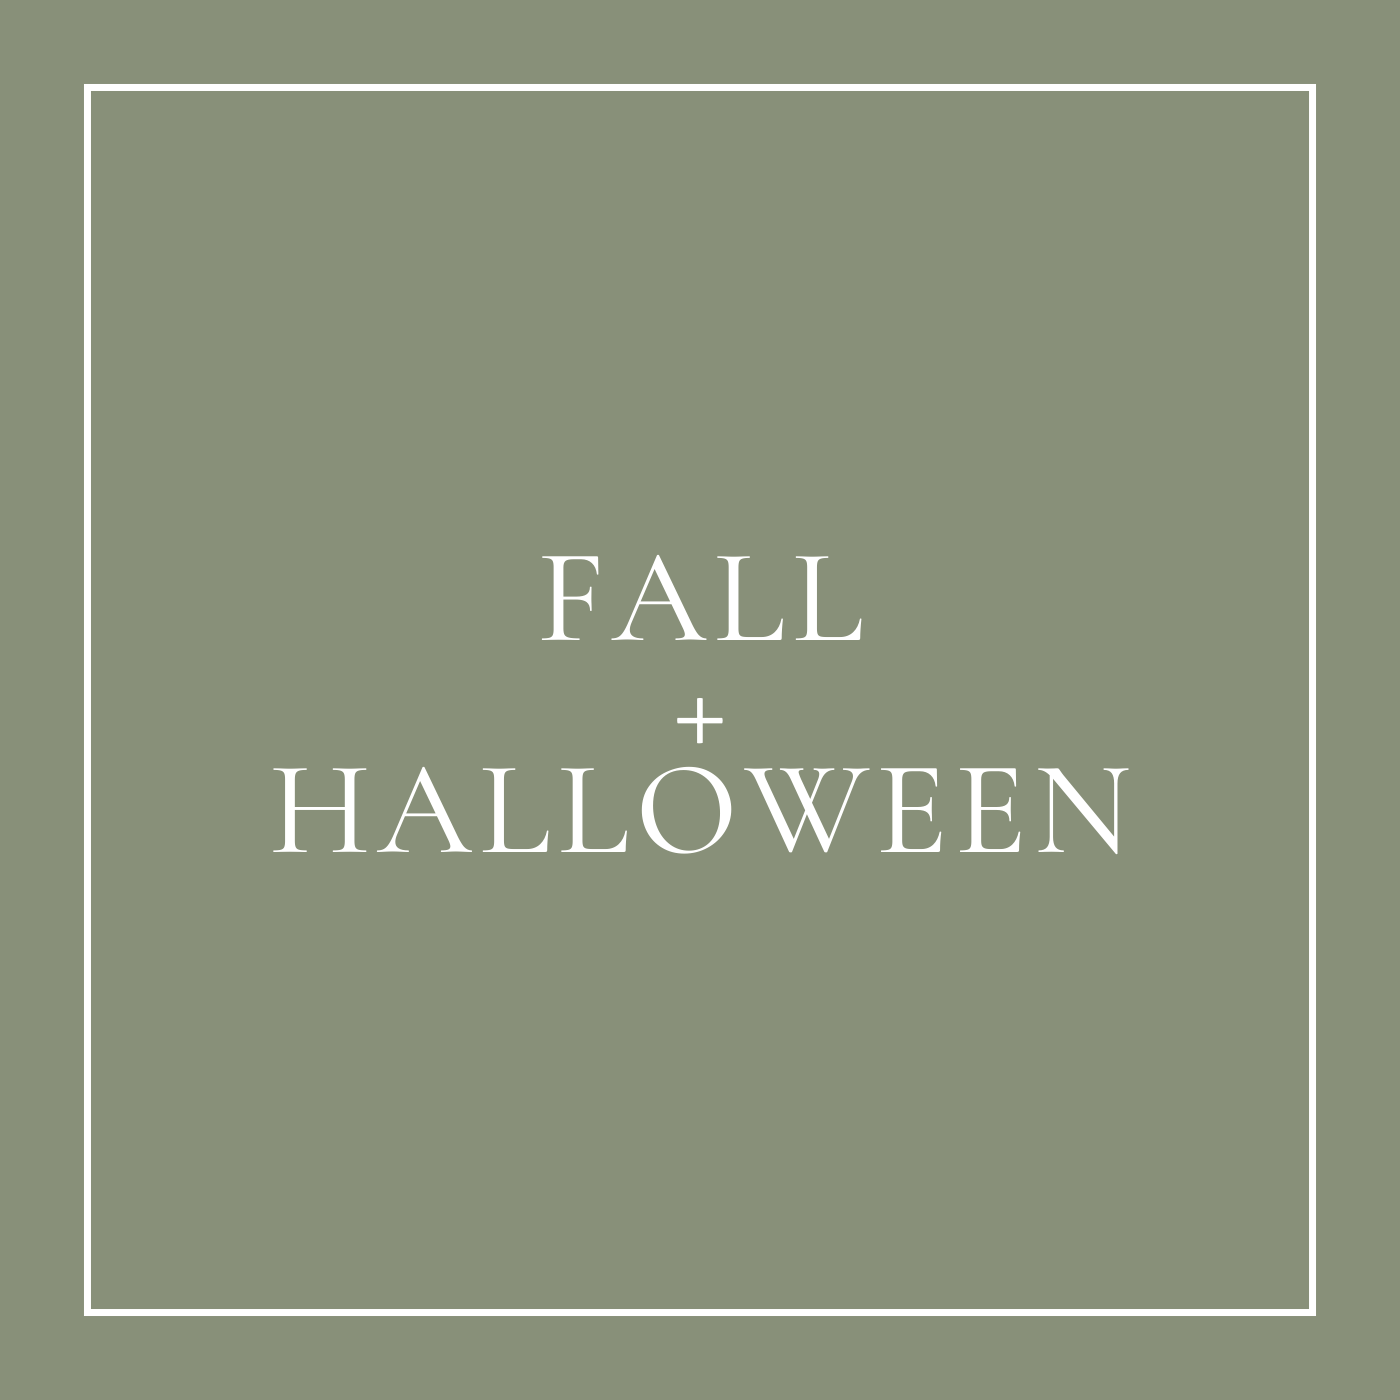 Fall + Halloween